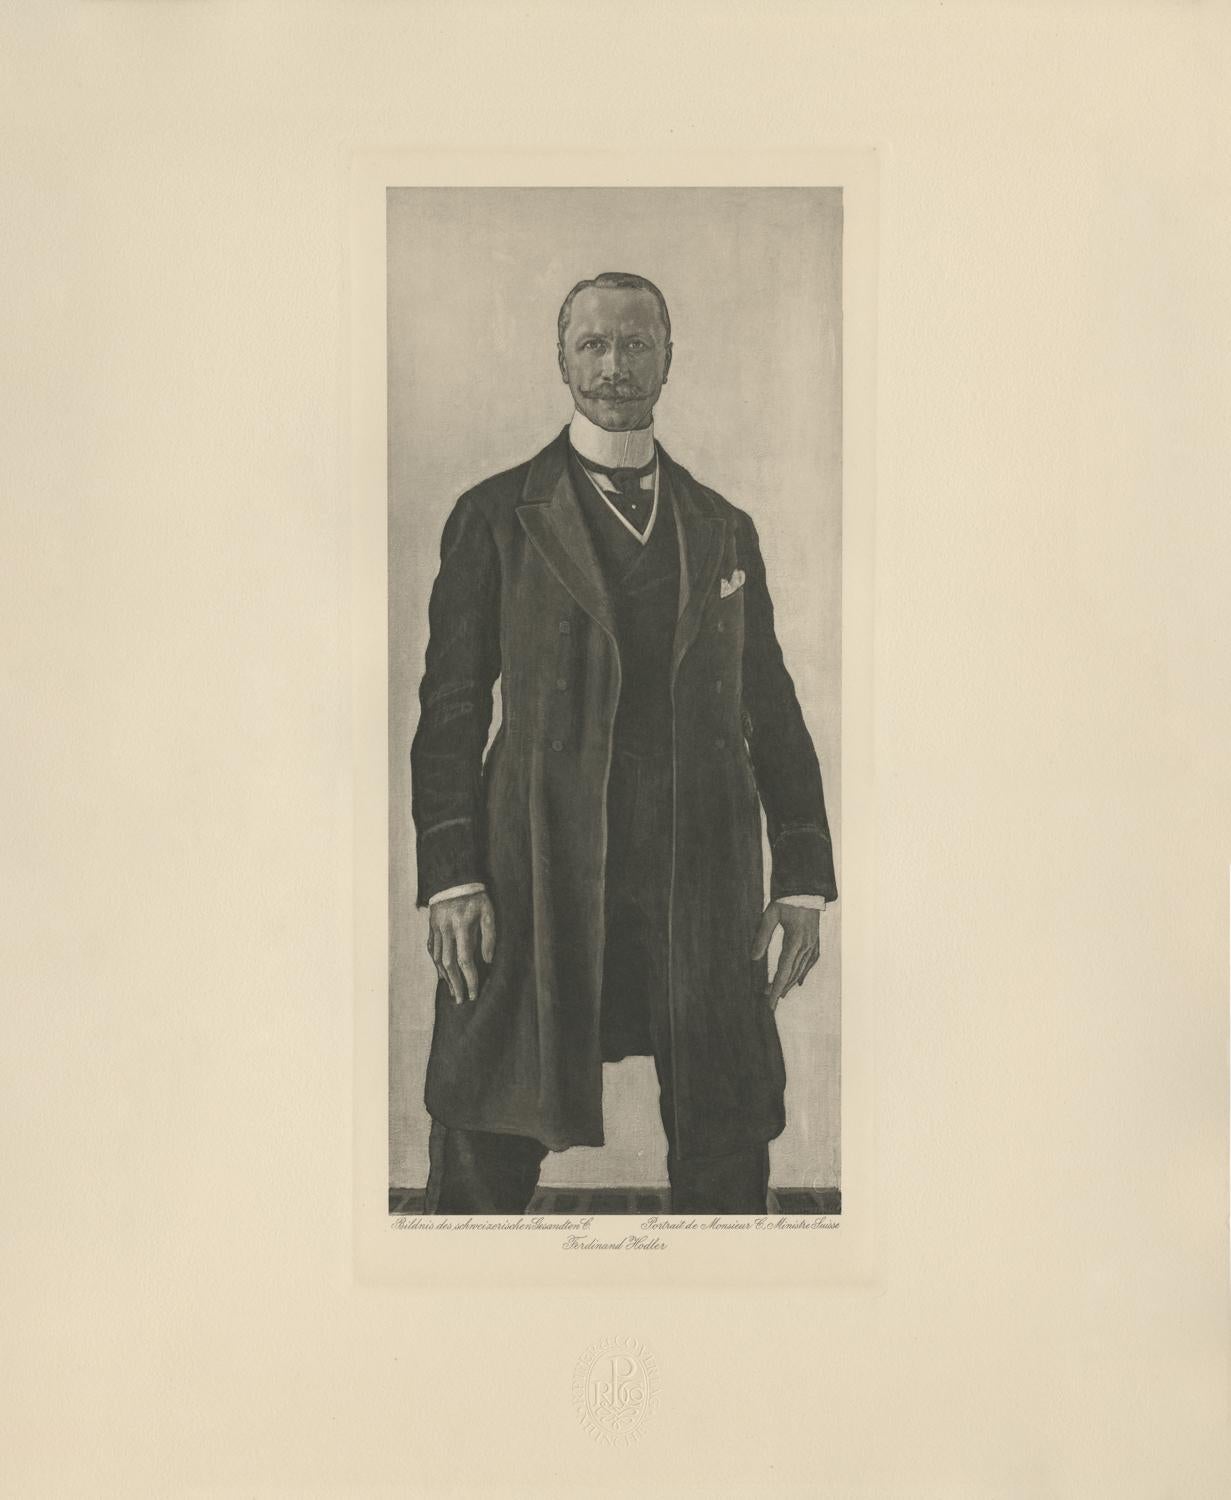 Ferdinand Hodler & R. Piper & Co. Figurative Print - "Portrait of Swiss Political Attachee, Carlin" Copper Plate Heliogravure